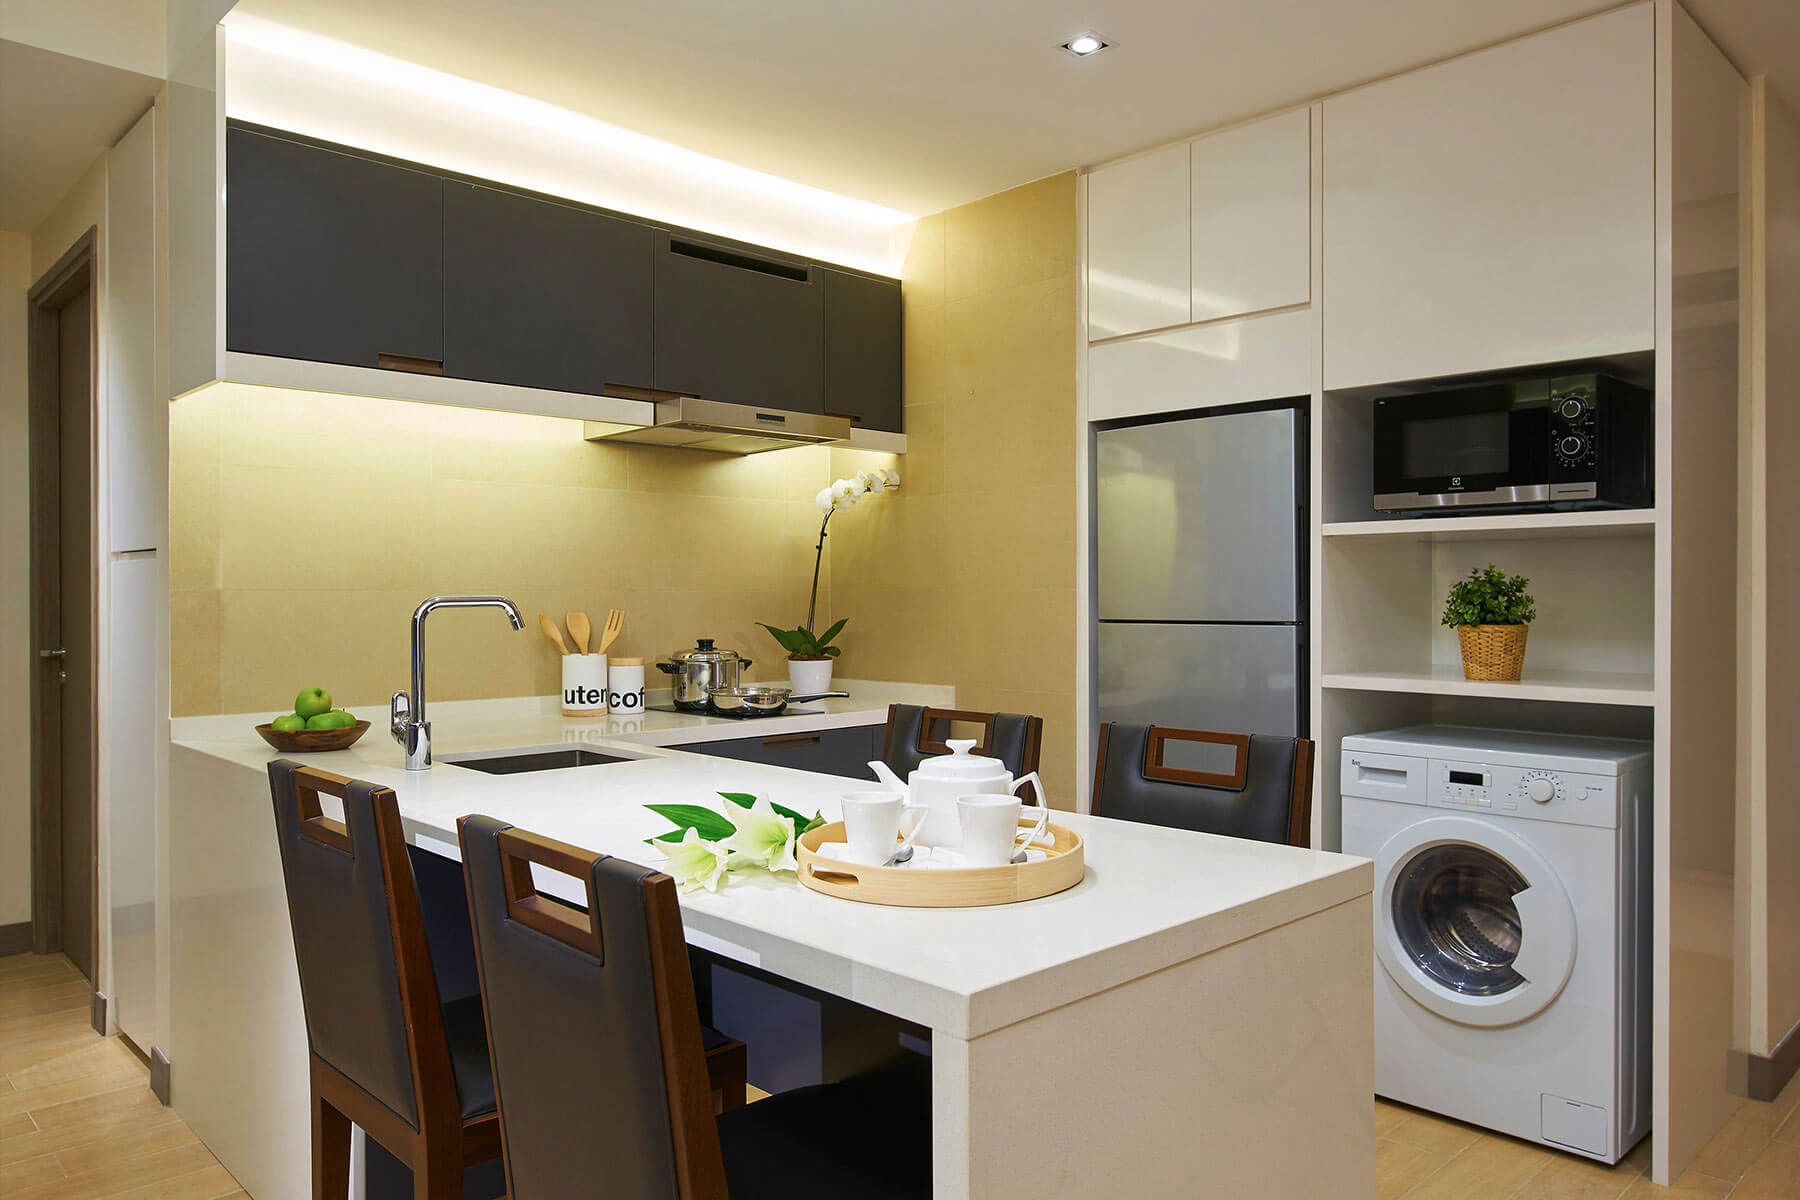 Oasia Residence Singapore - 2-bedroom apartment, kitchen